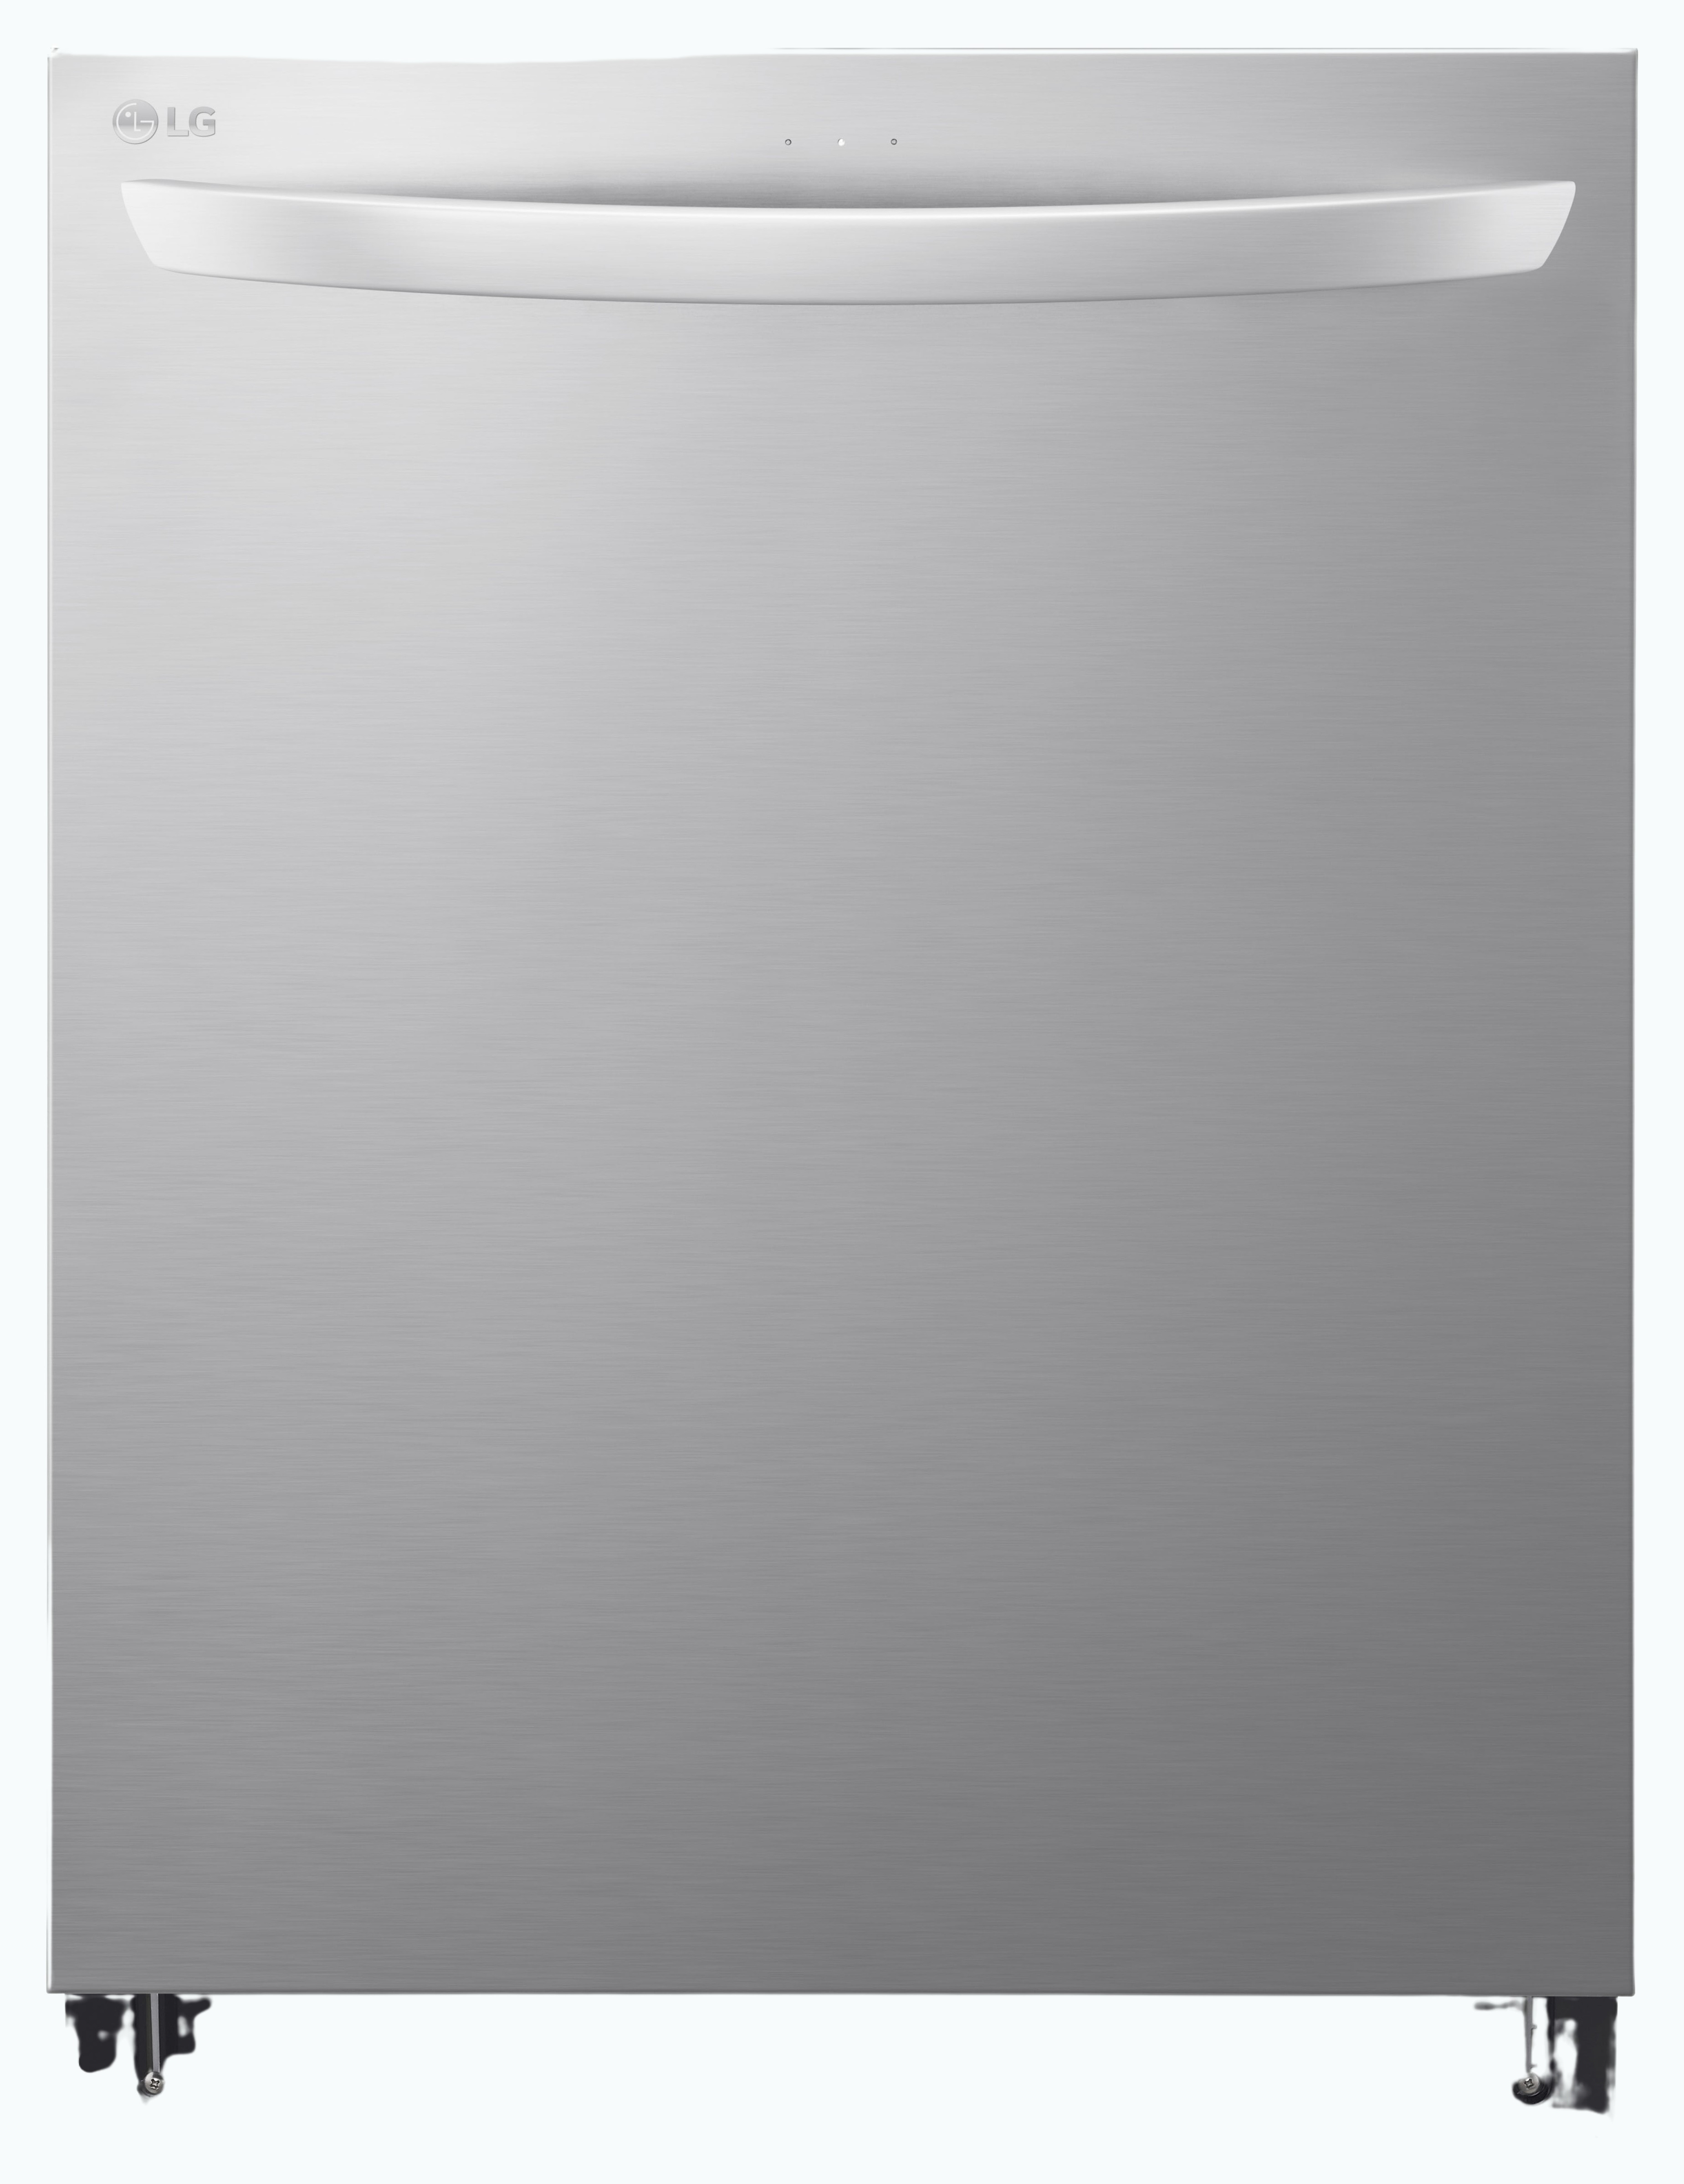 Product Image of the LG Dishwasher with QuadWash